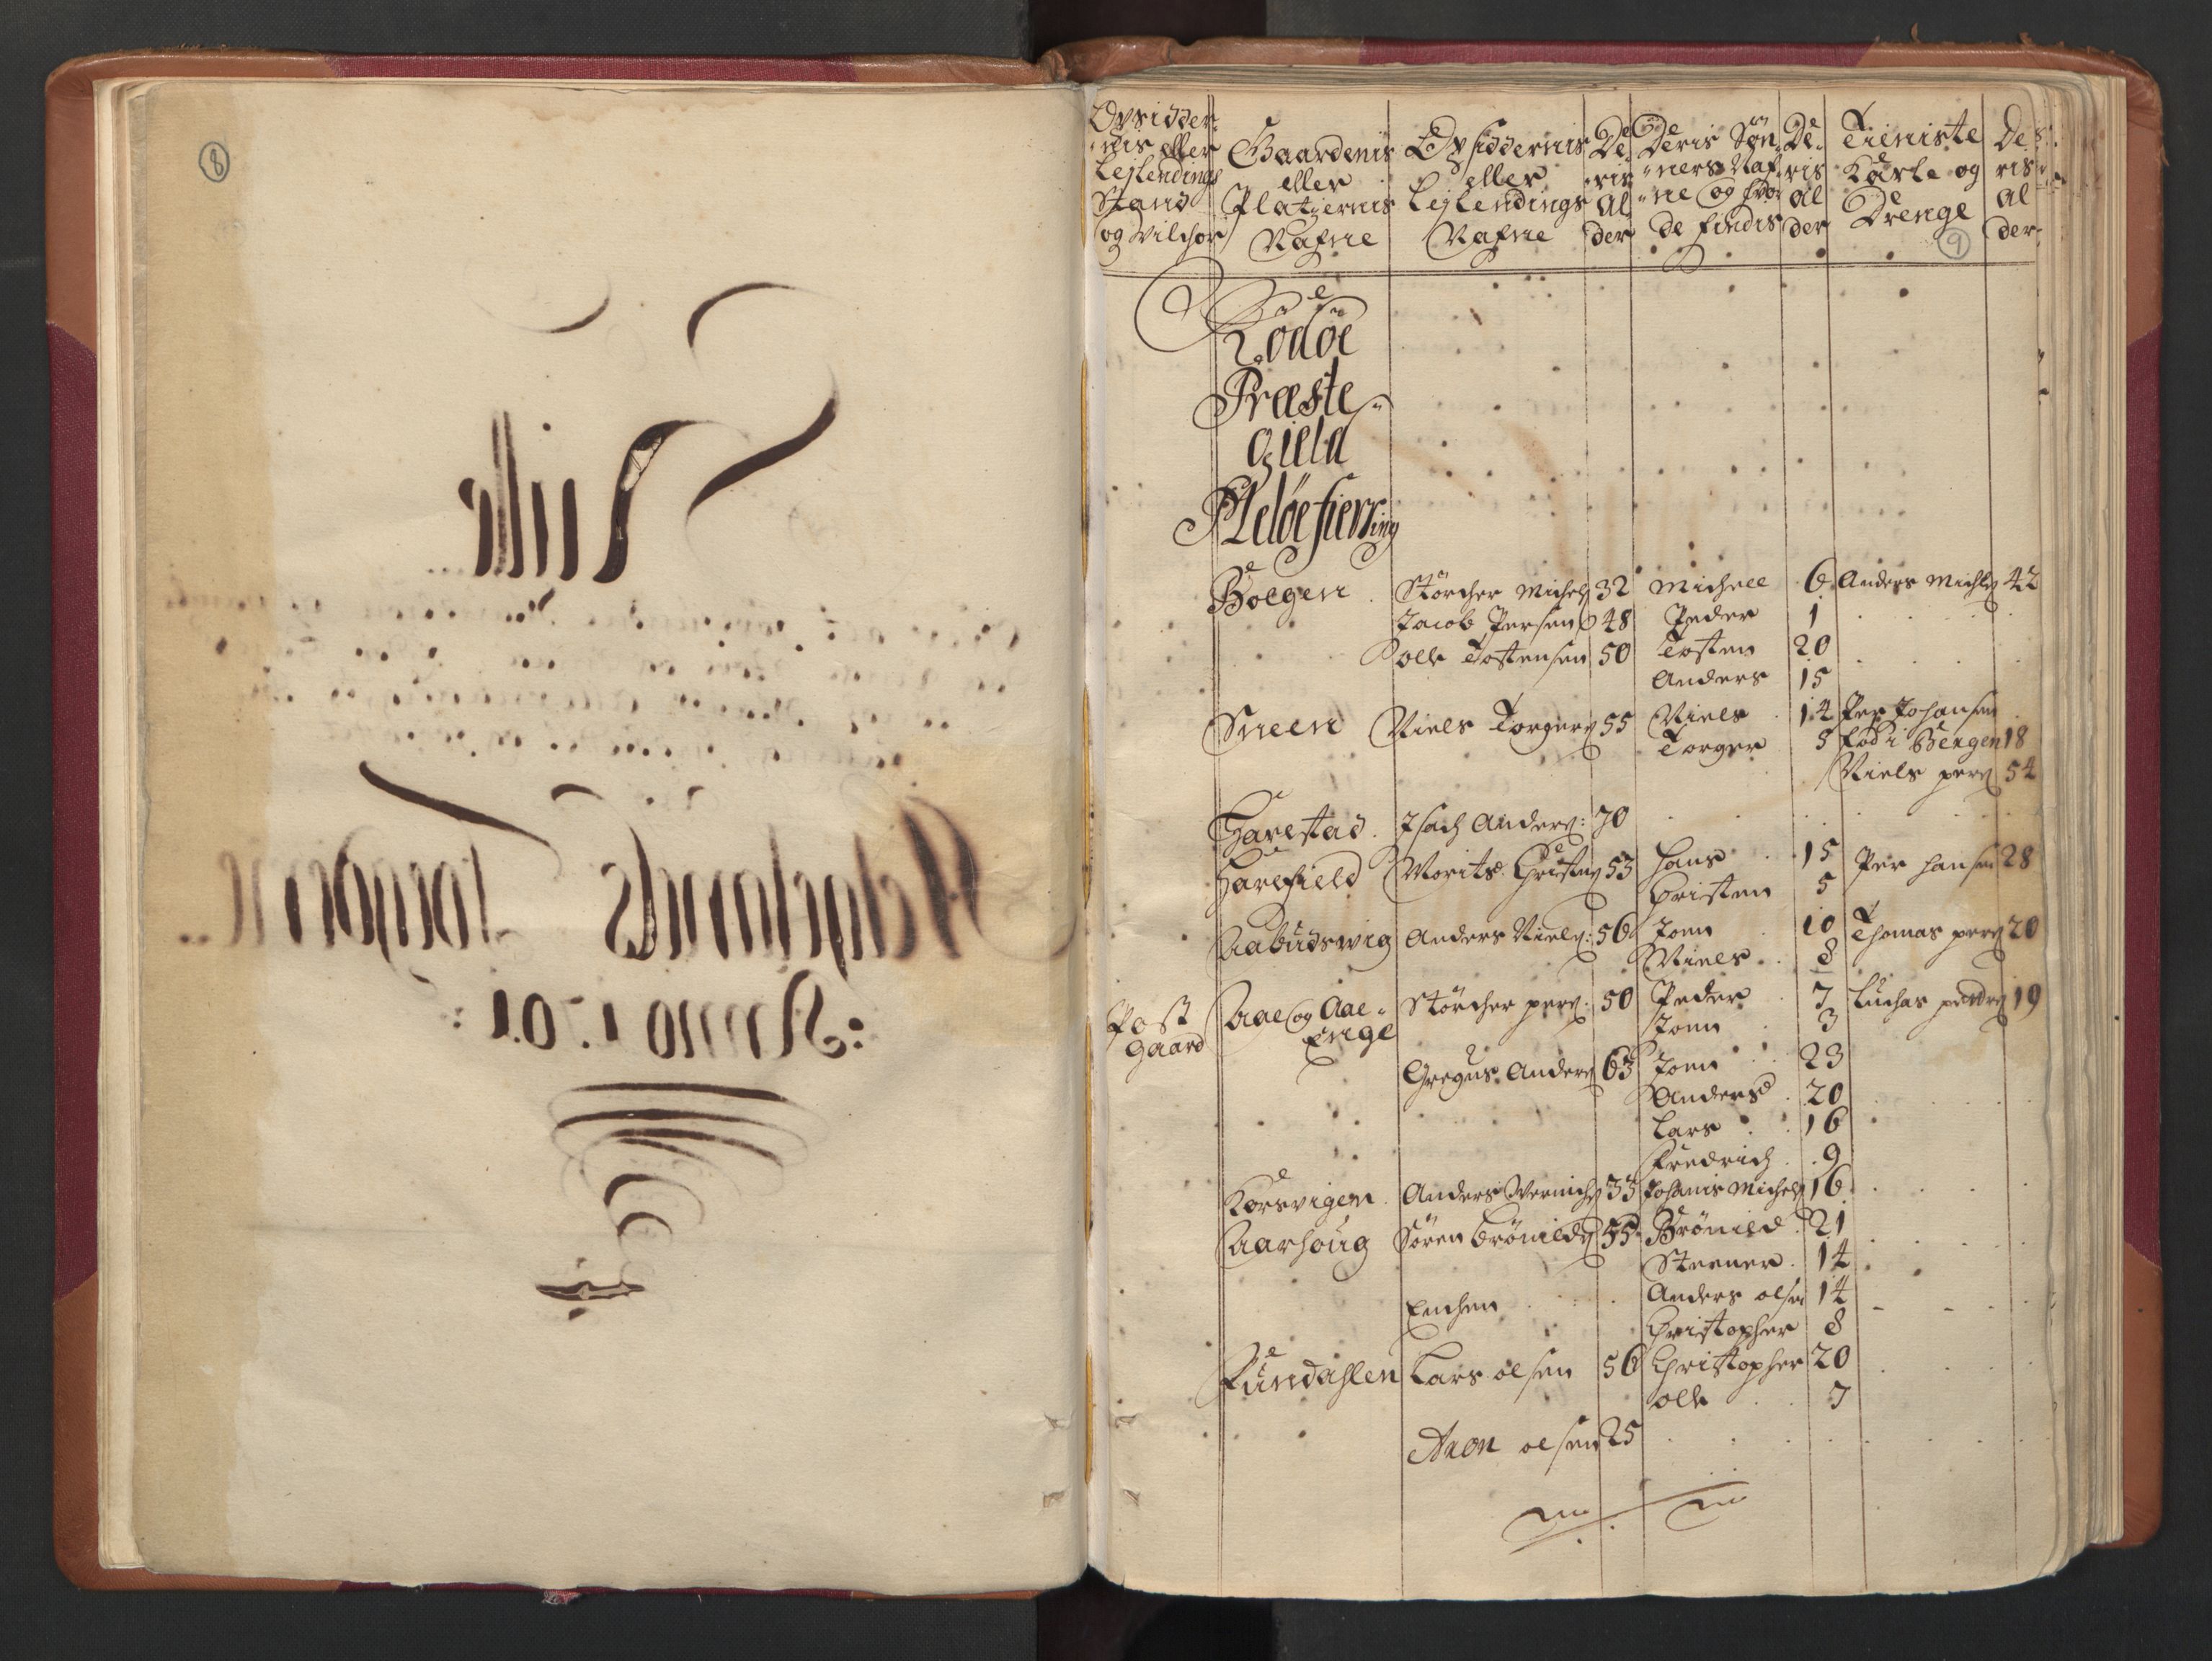 RA, Census (manntall) 1701, no. 16: Helgeland fogderi, 1701, p. 8-9